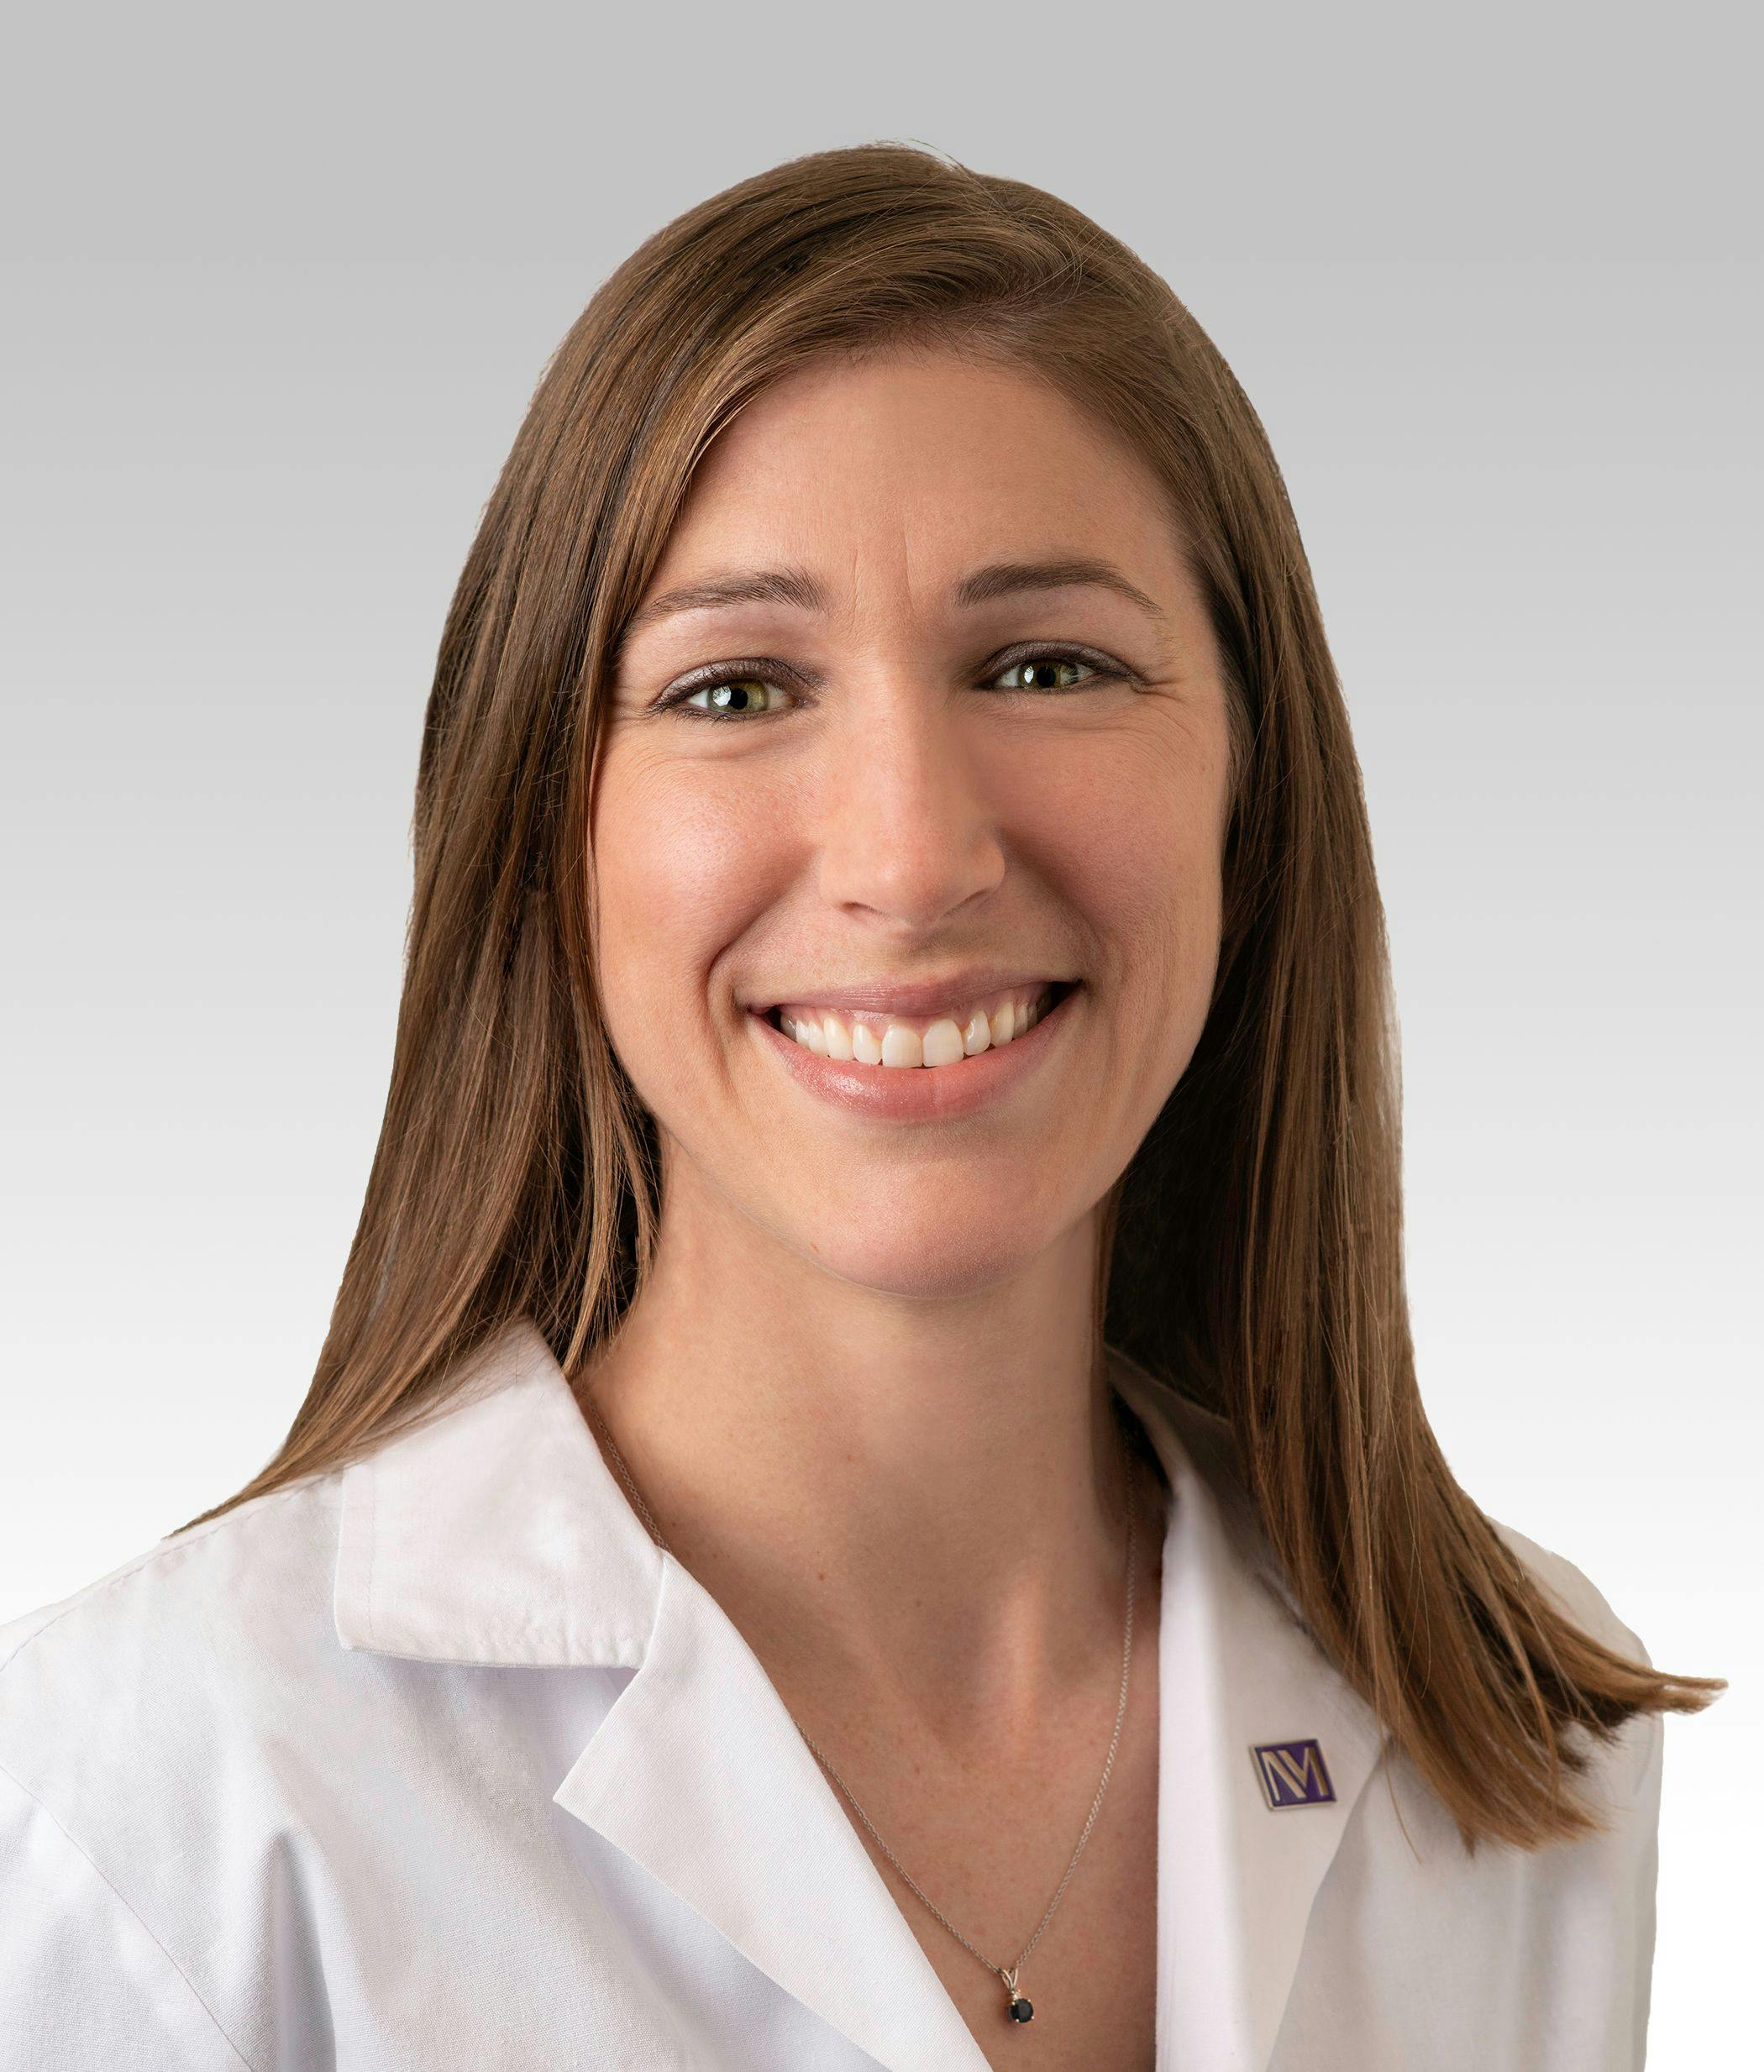 Alicia K. Morgans, MD, MPH (Moderator)

Associate Professor of Medicine

Feinberg School of Medicine

Northwestern University

Chicago, IL